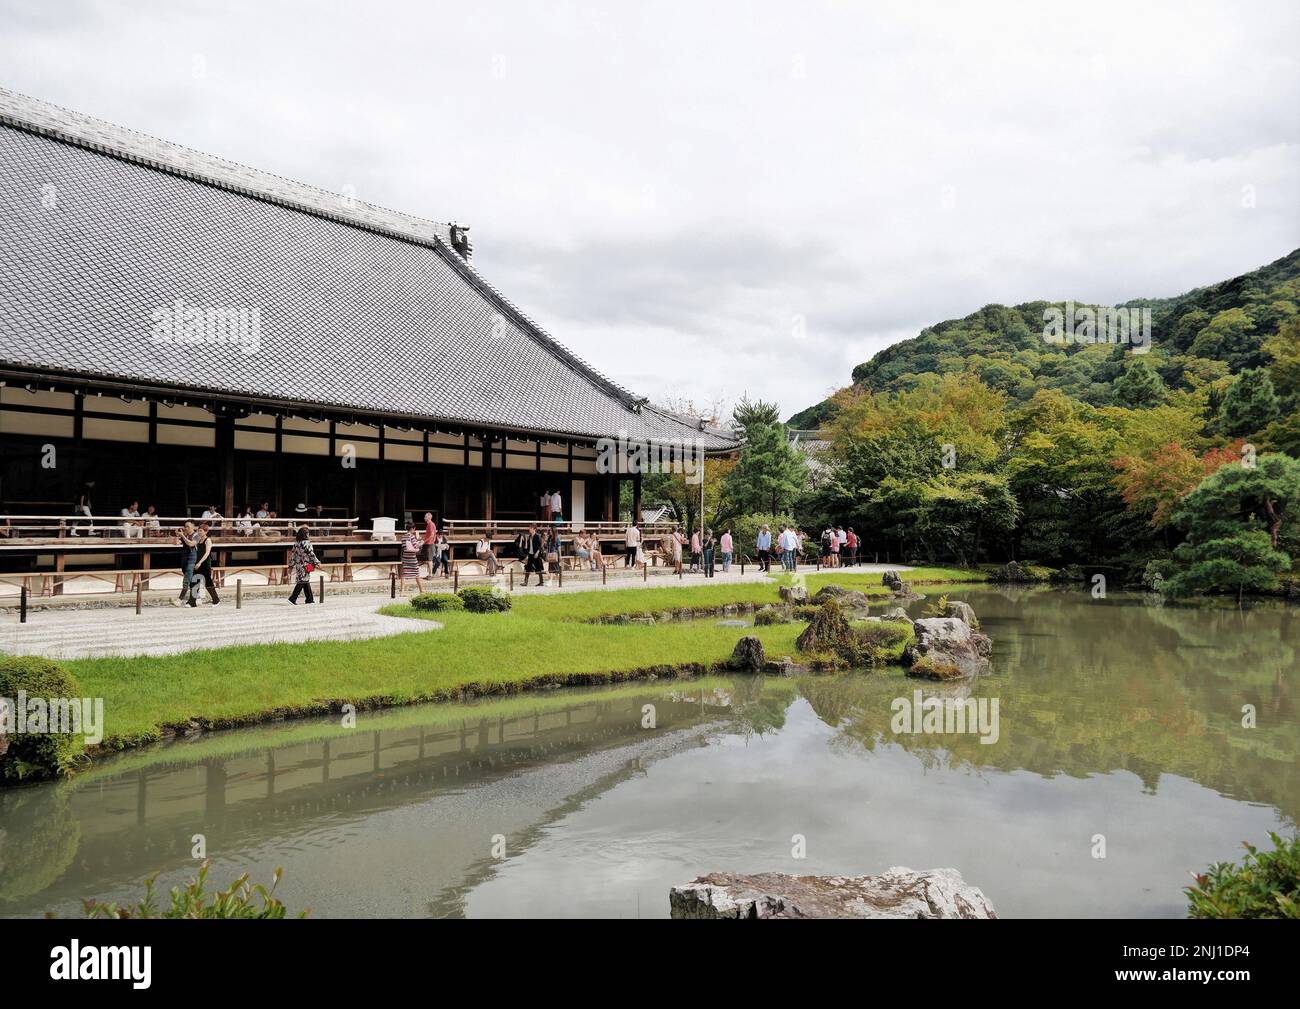 Kyoto, Japan - Sept, 2017: Garden with pond in front of Main pavilion Tenryu-ji Temple at Arashiyama Traditional Japanese Architecture. Sogenchi Pond Stock Photo